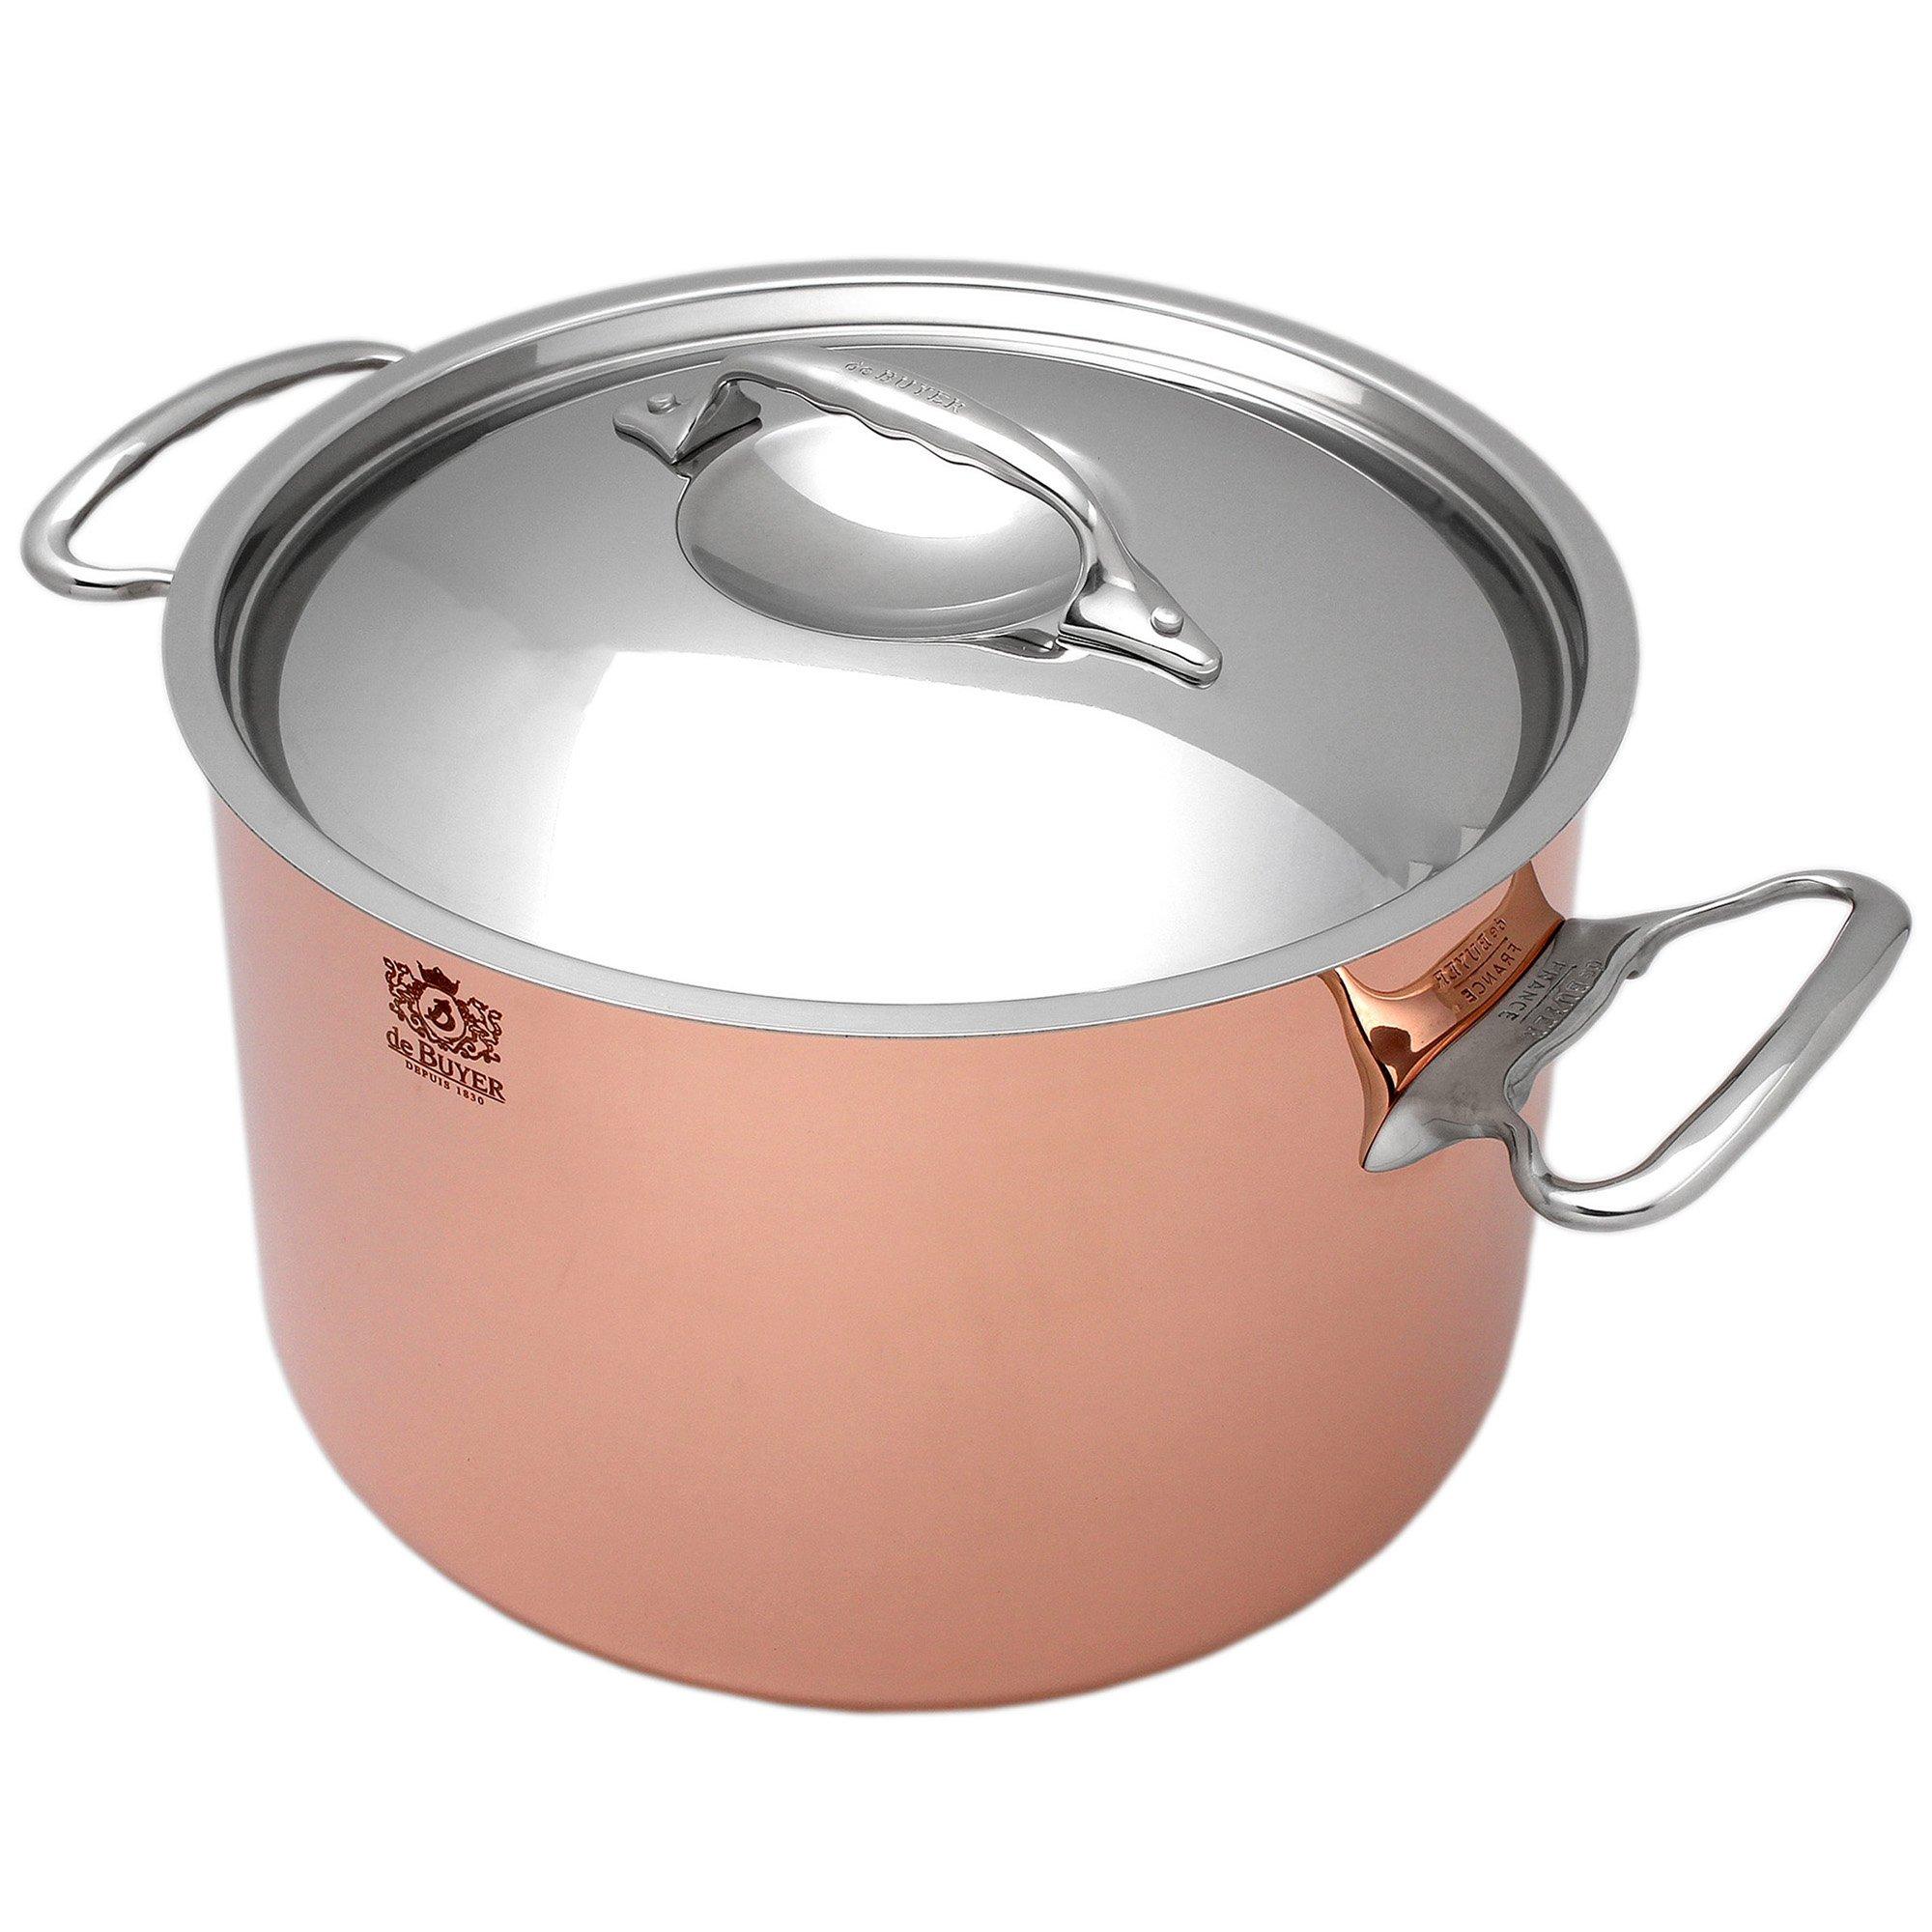 de Buyer Prima Matera copper roasting pan 24 cm stainless lid 6243.24